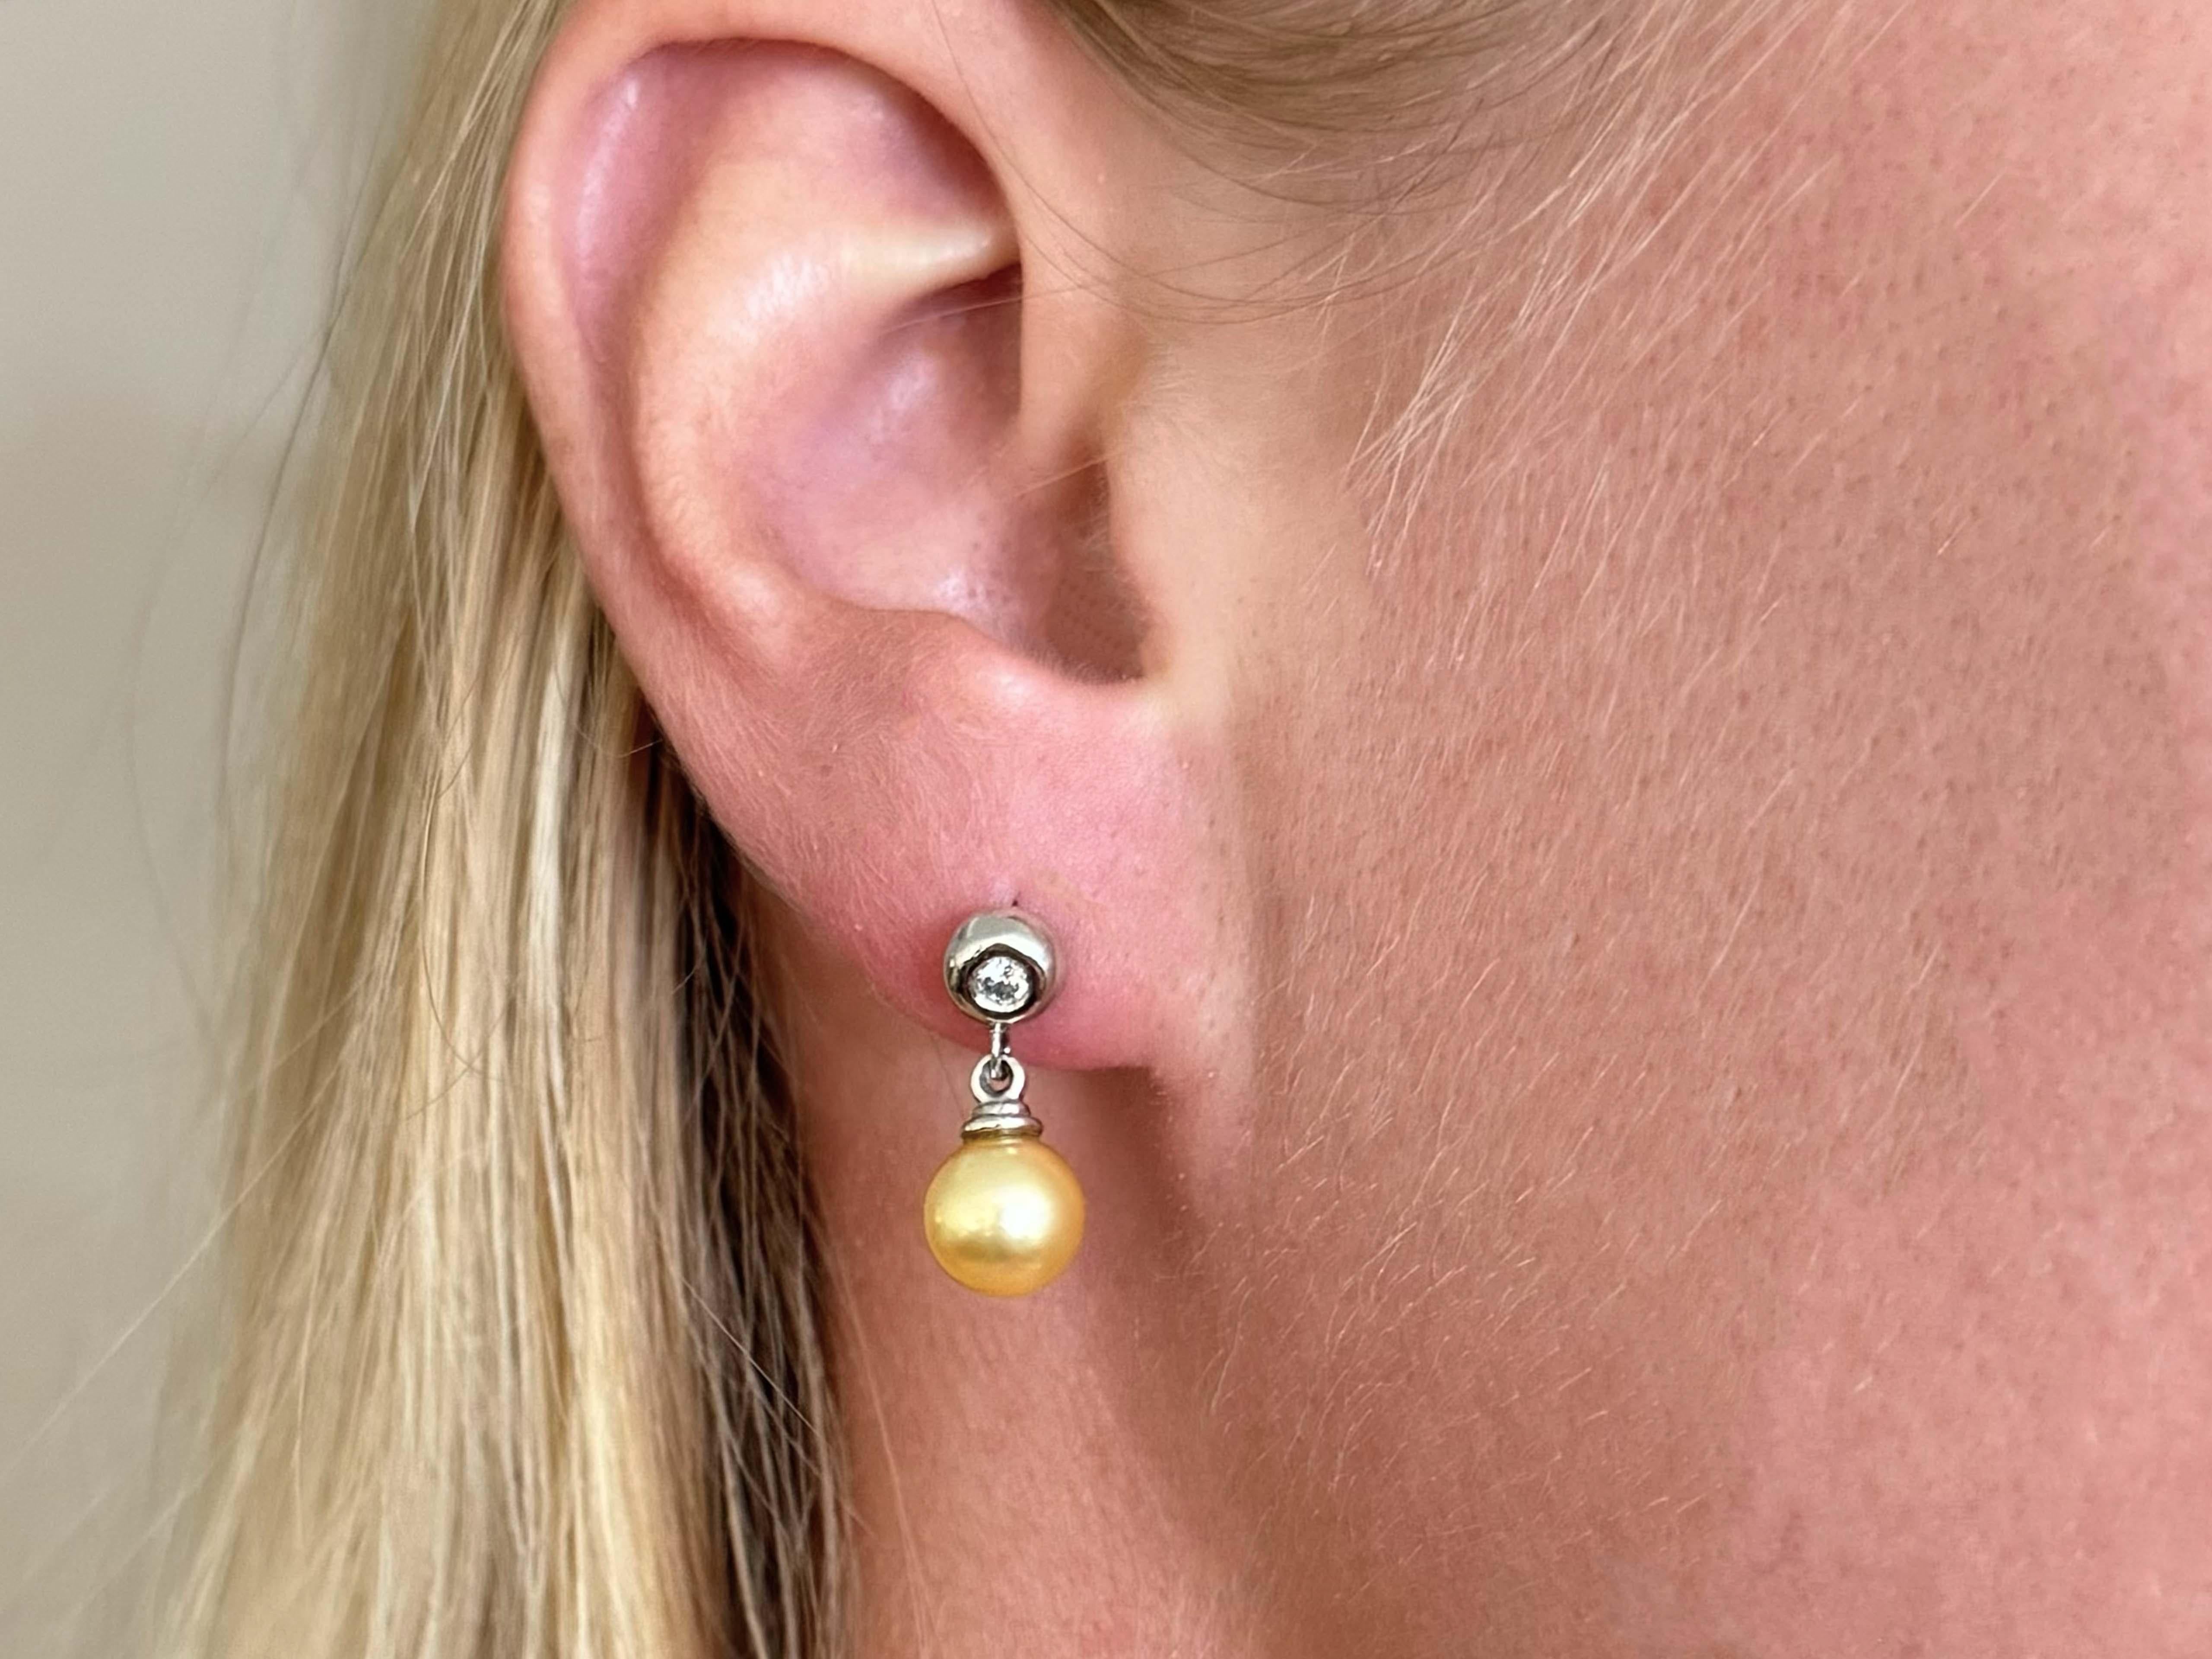 Earrings Specifications:

Metal: 14k White Gold

Earring Length: 0.60